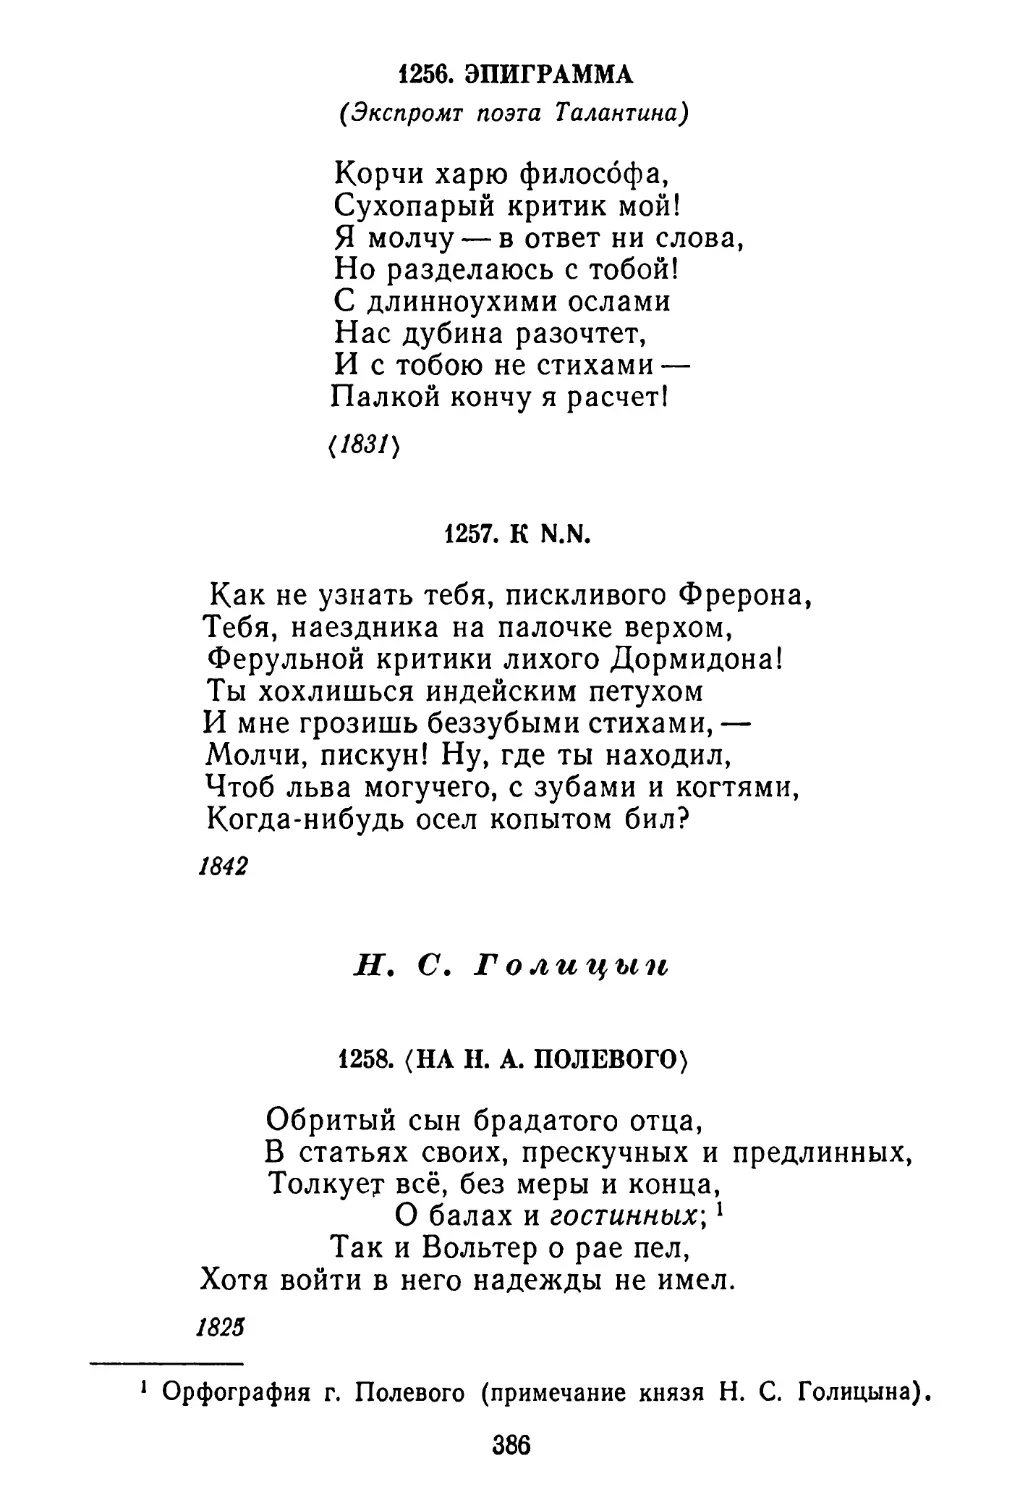 Н. С. Голицын